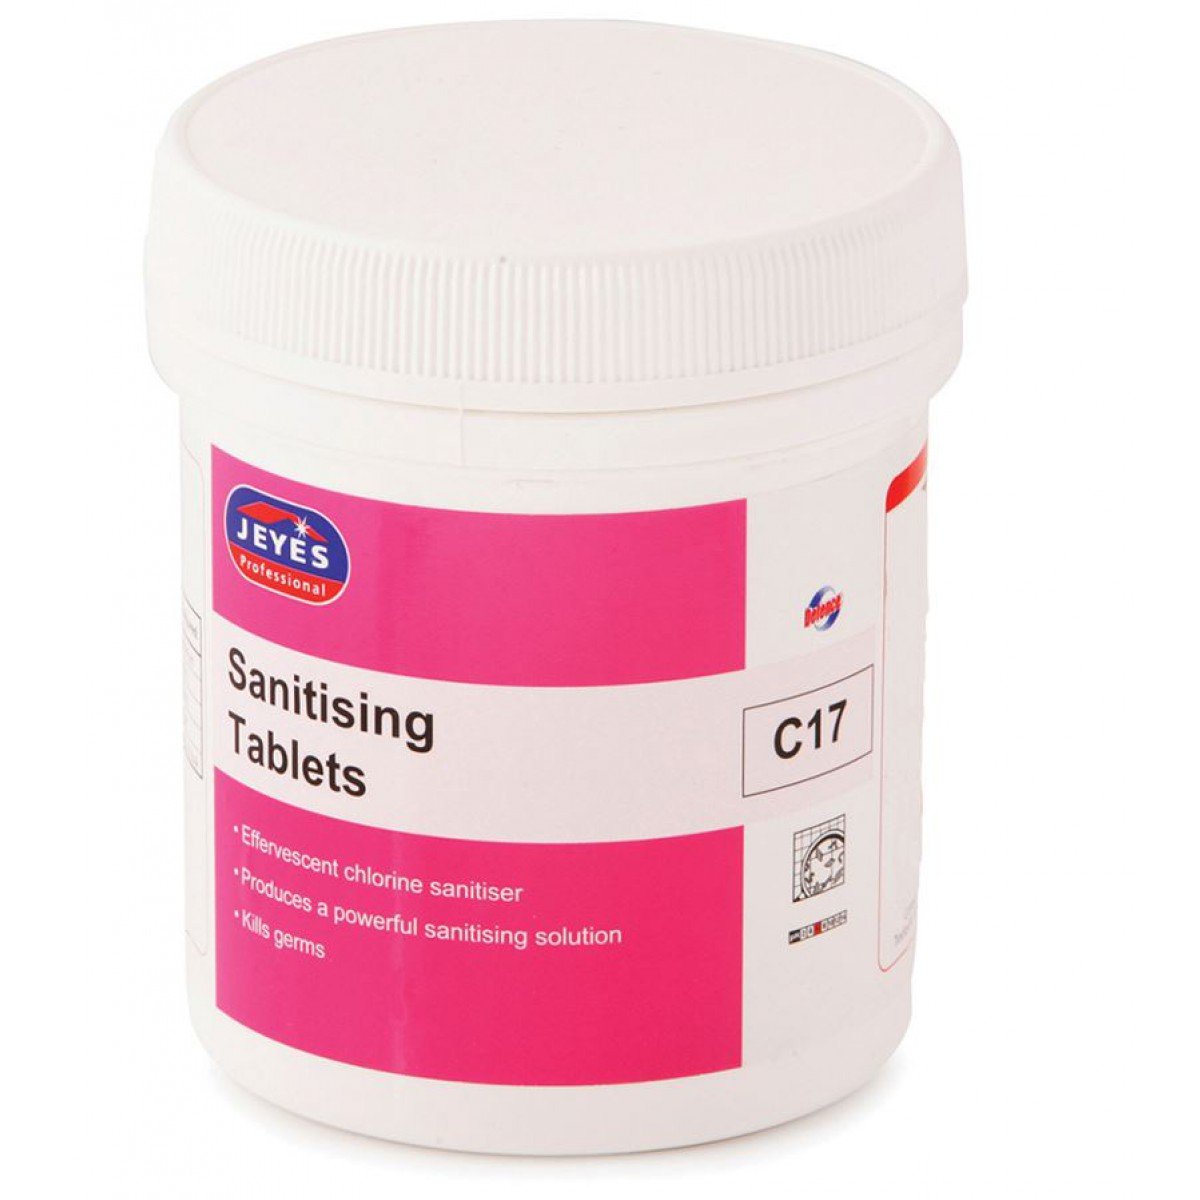 Jeyes Sanitising Tablets - 180 tablets